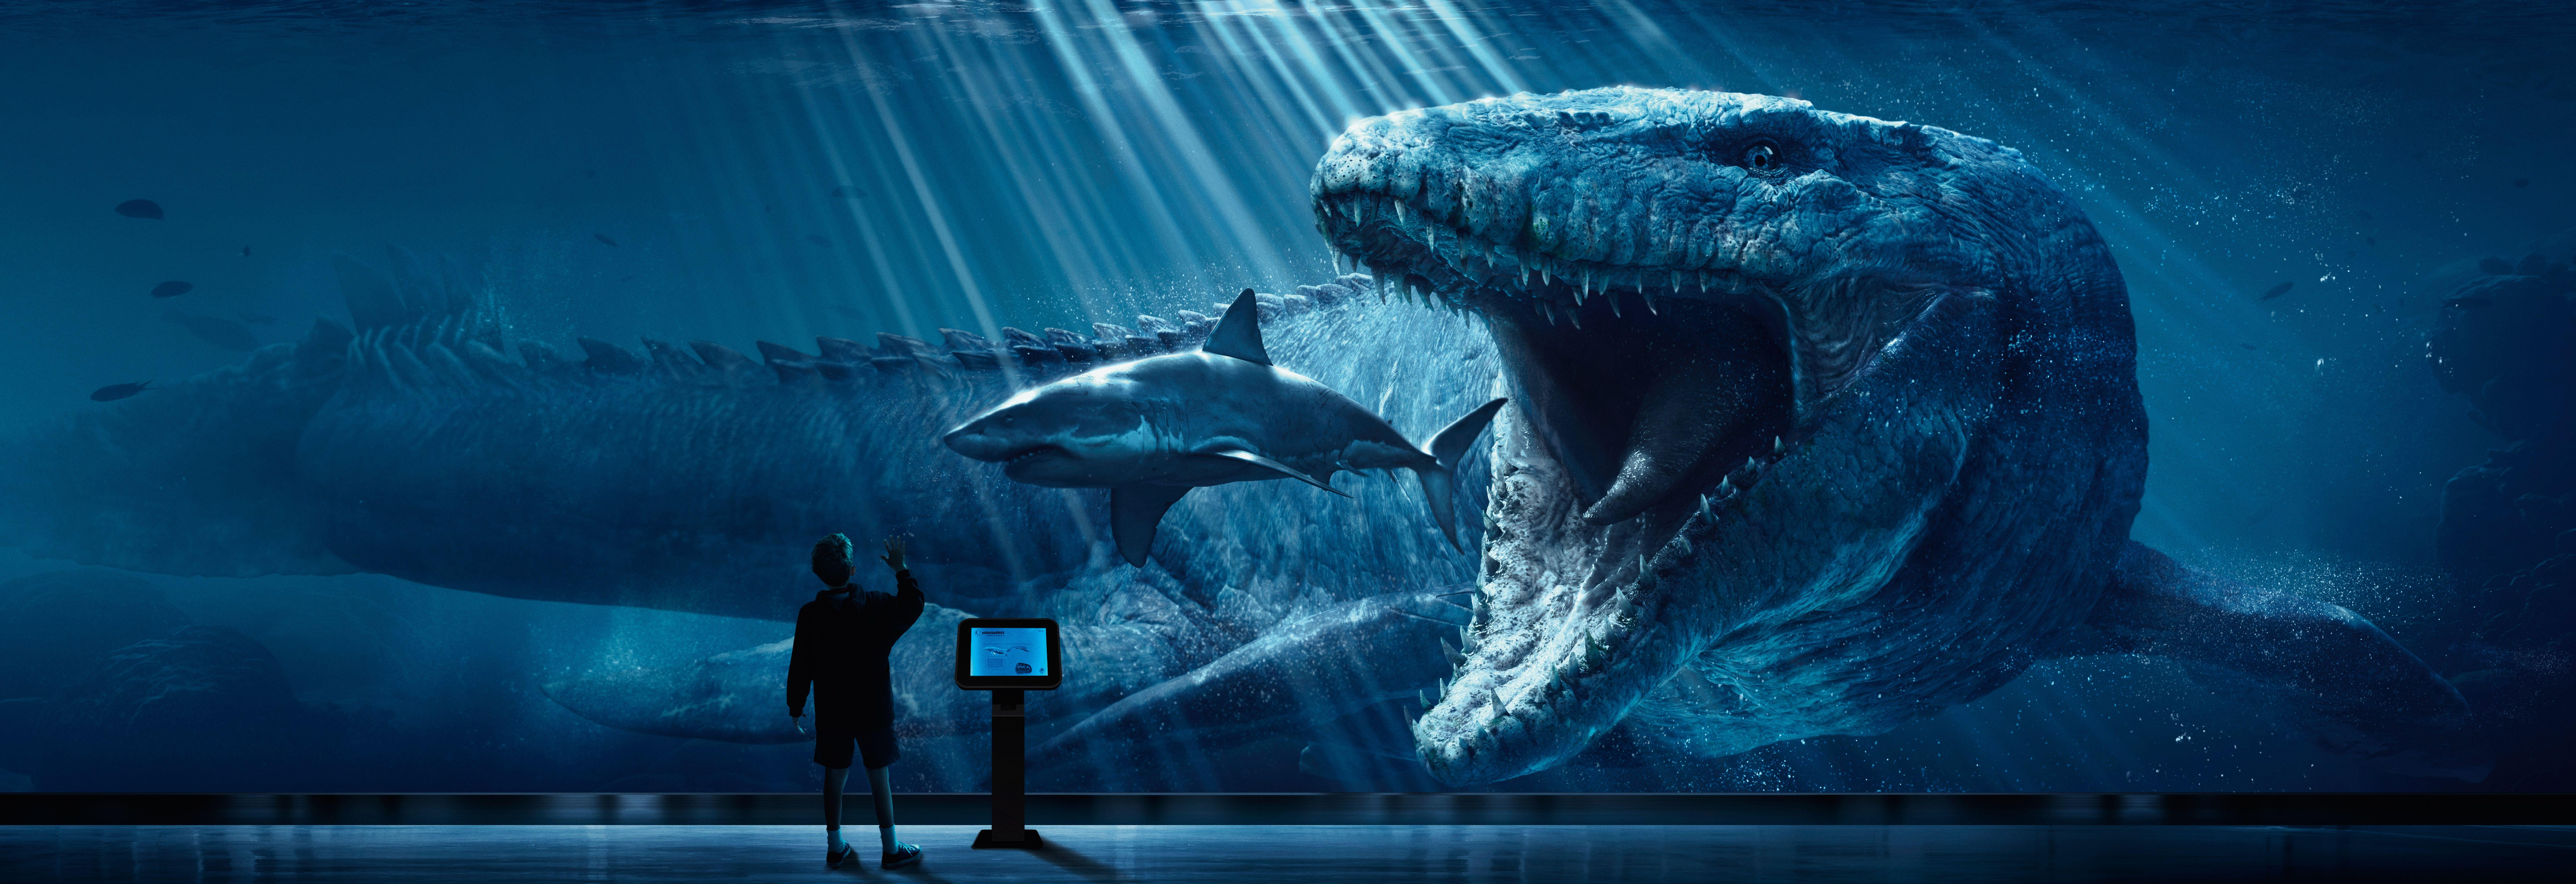 Jurassic World 4K Wallpapers - Top Free Jurassic World 4K Backgrounds